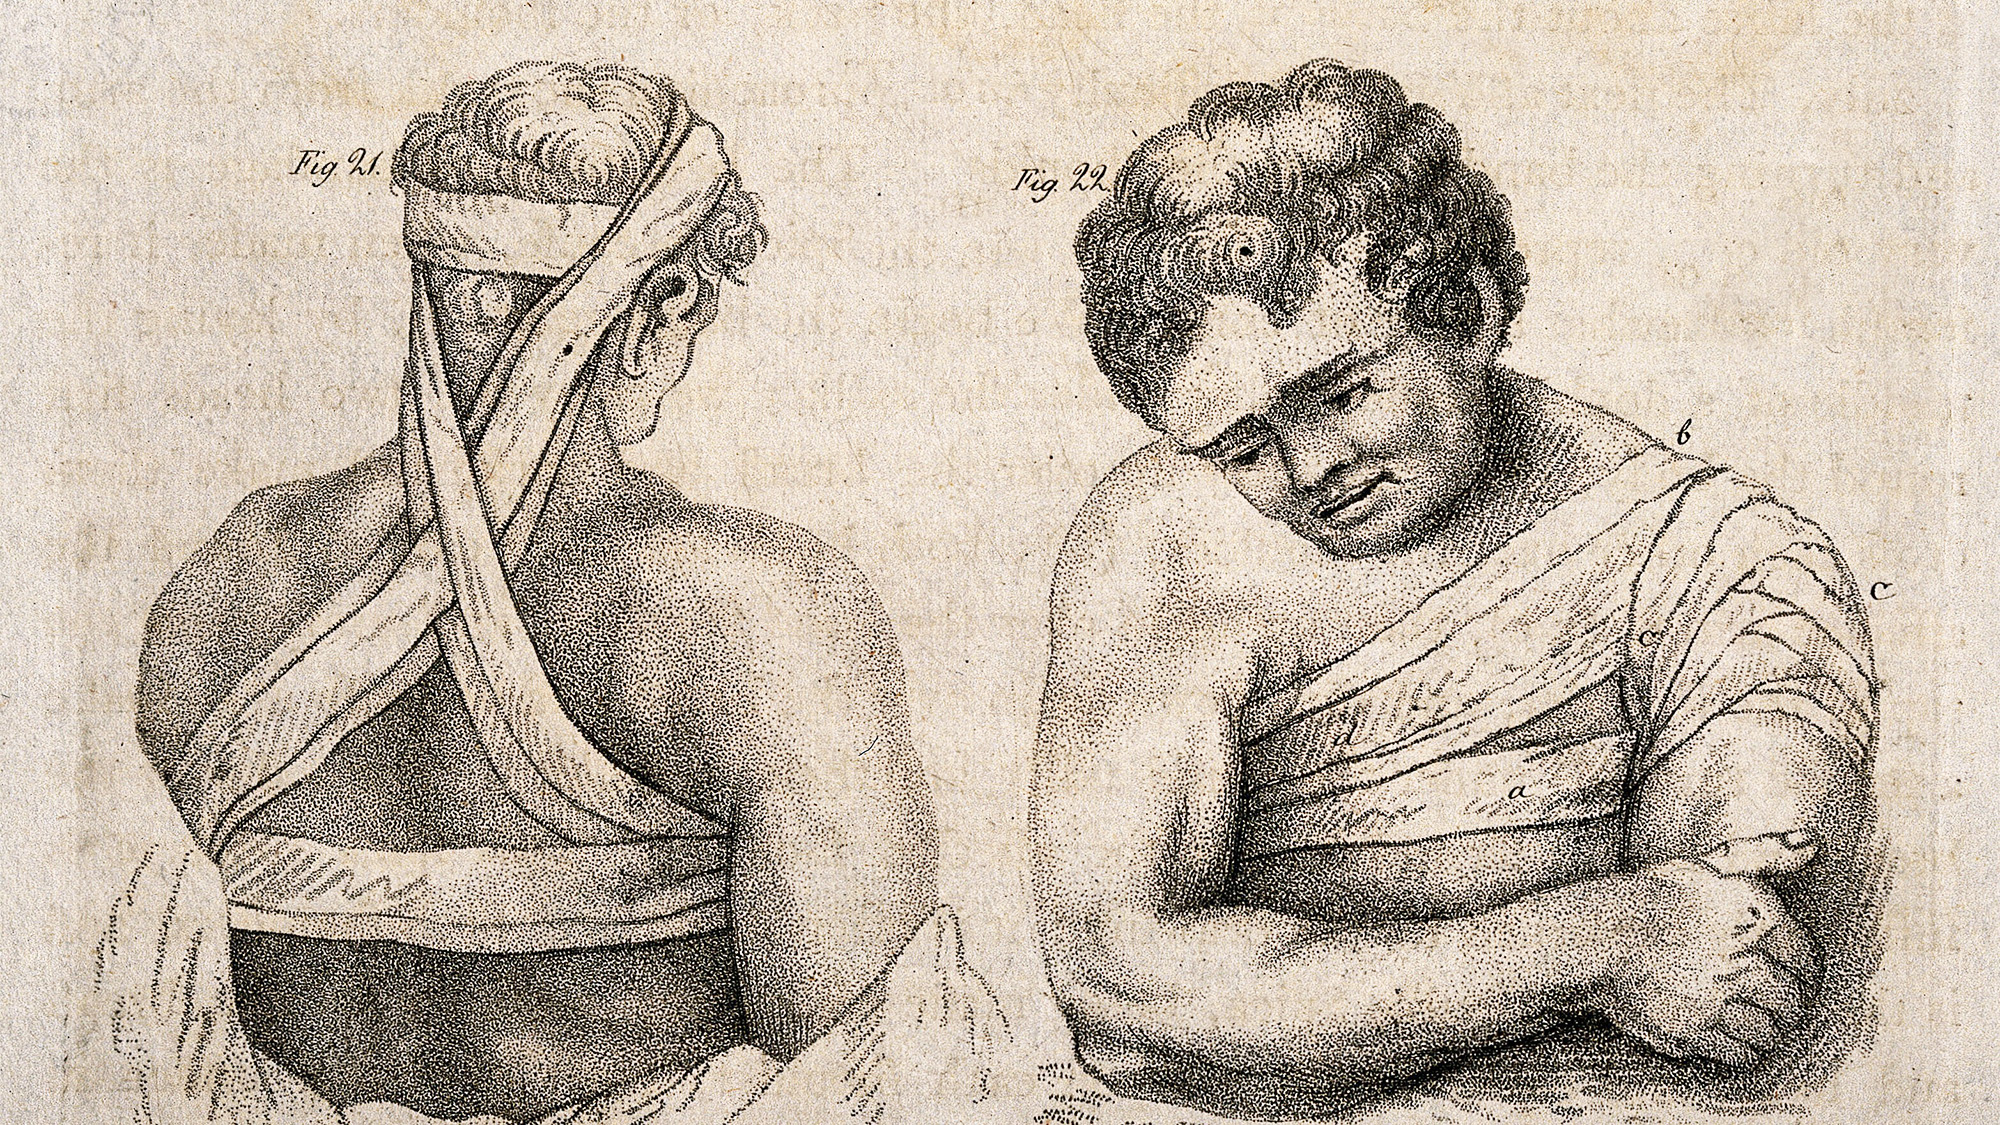 An historical illustration depicts bandaging technique